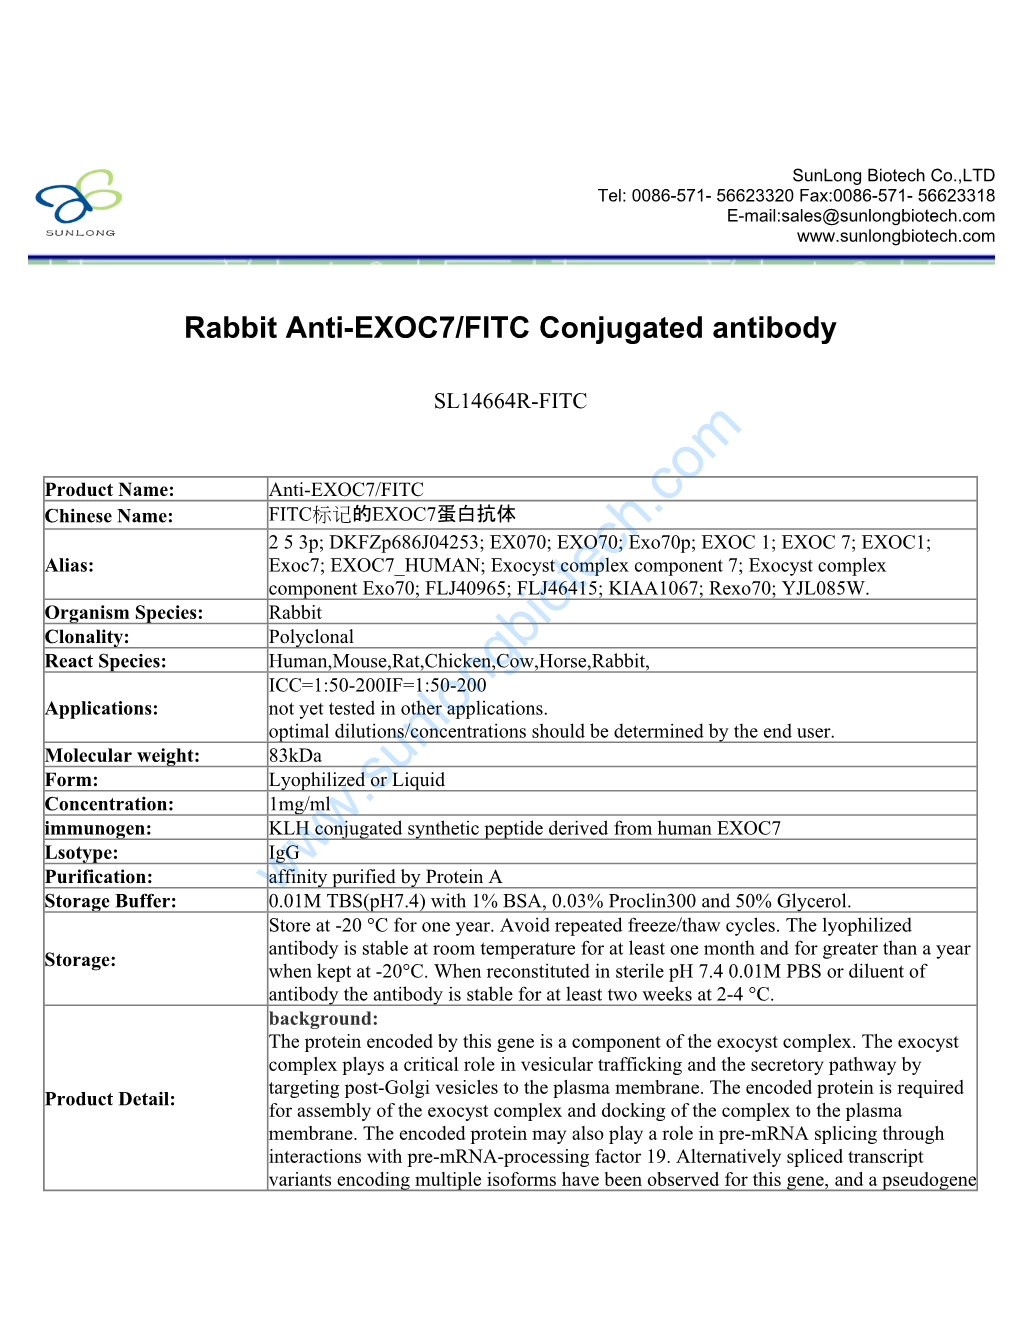 Rabbit Anti-EXOC7/FITC Conjugated Antibody-SL14664R-FITC